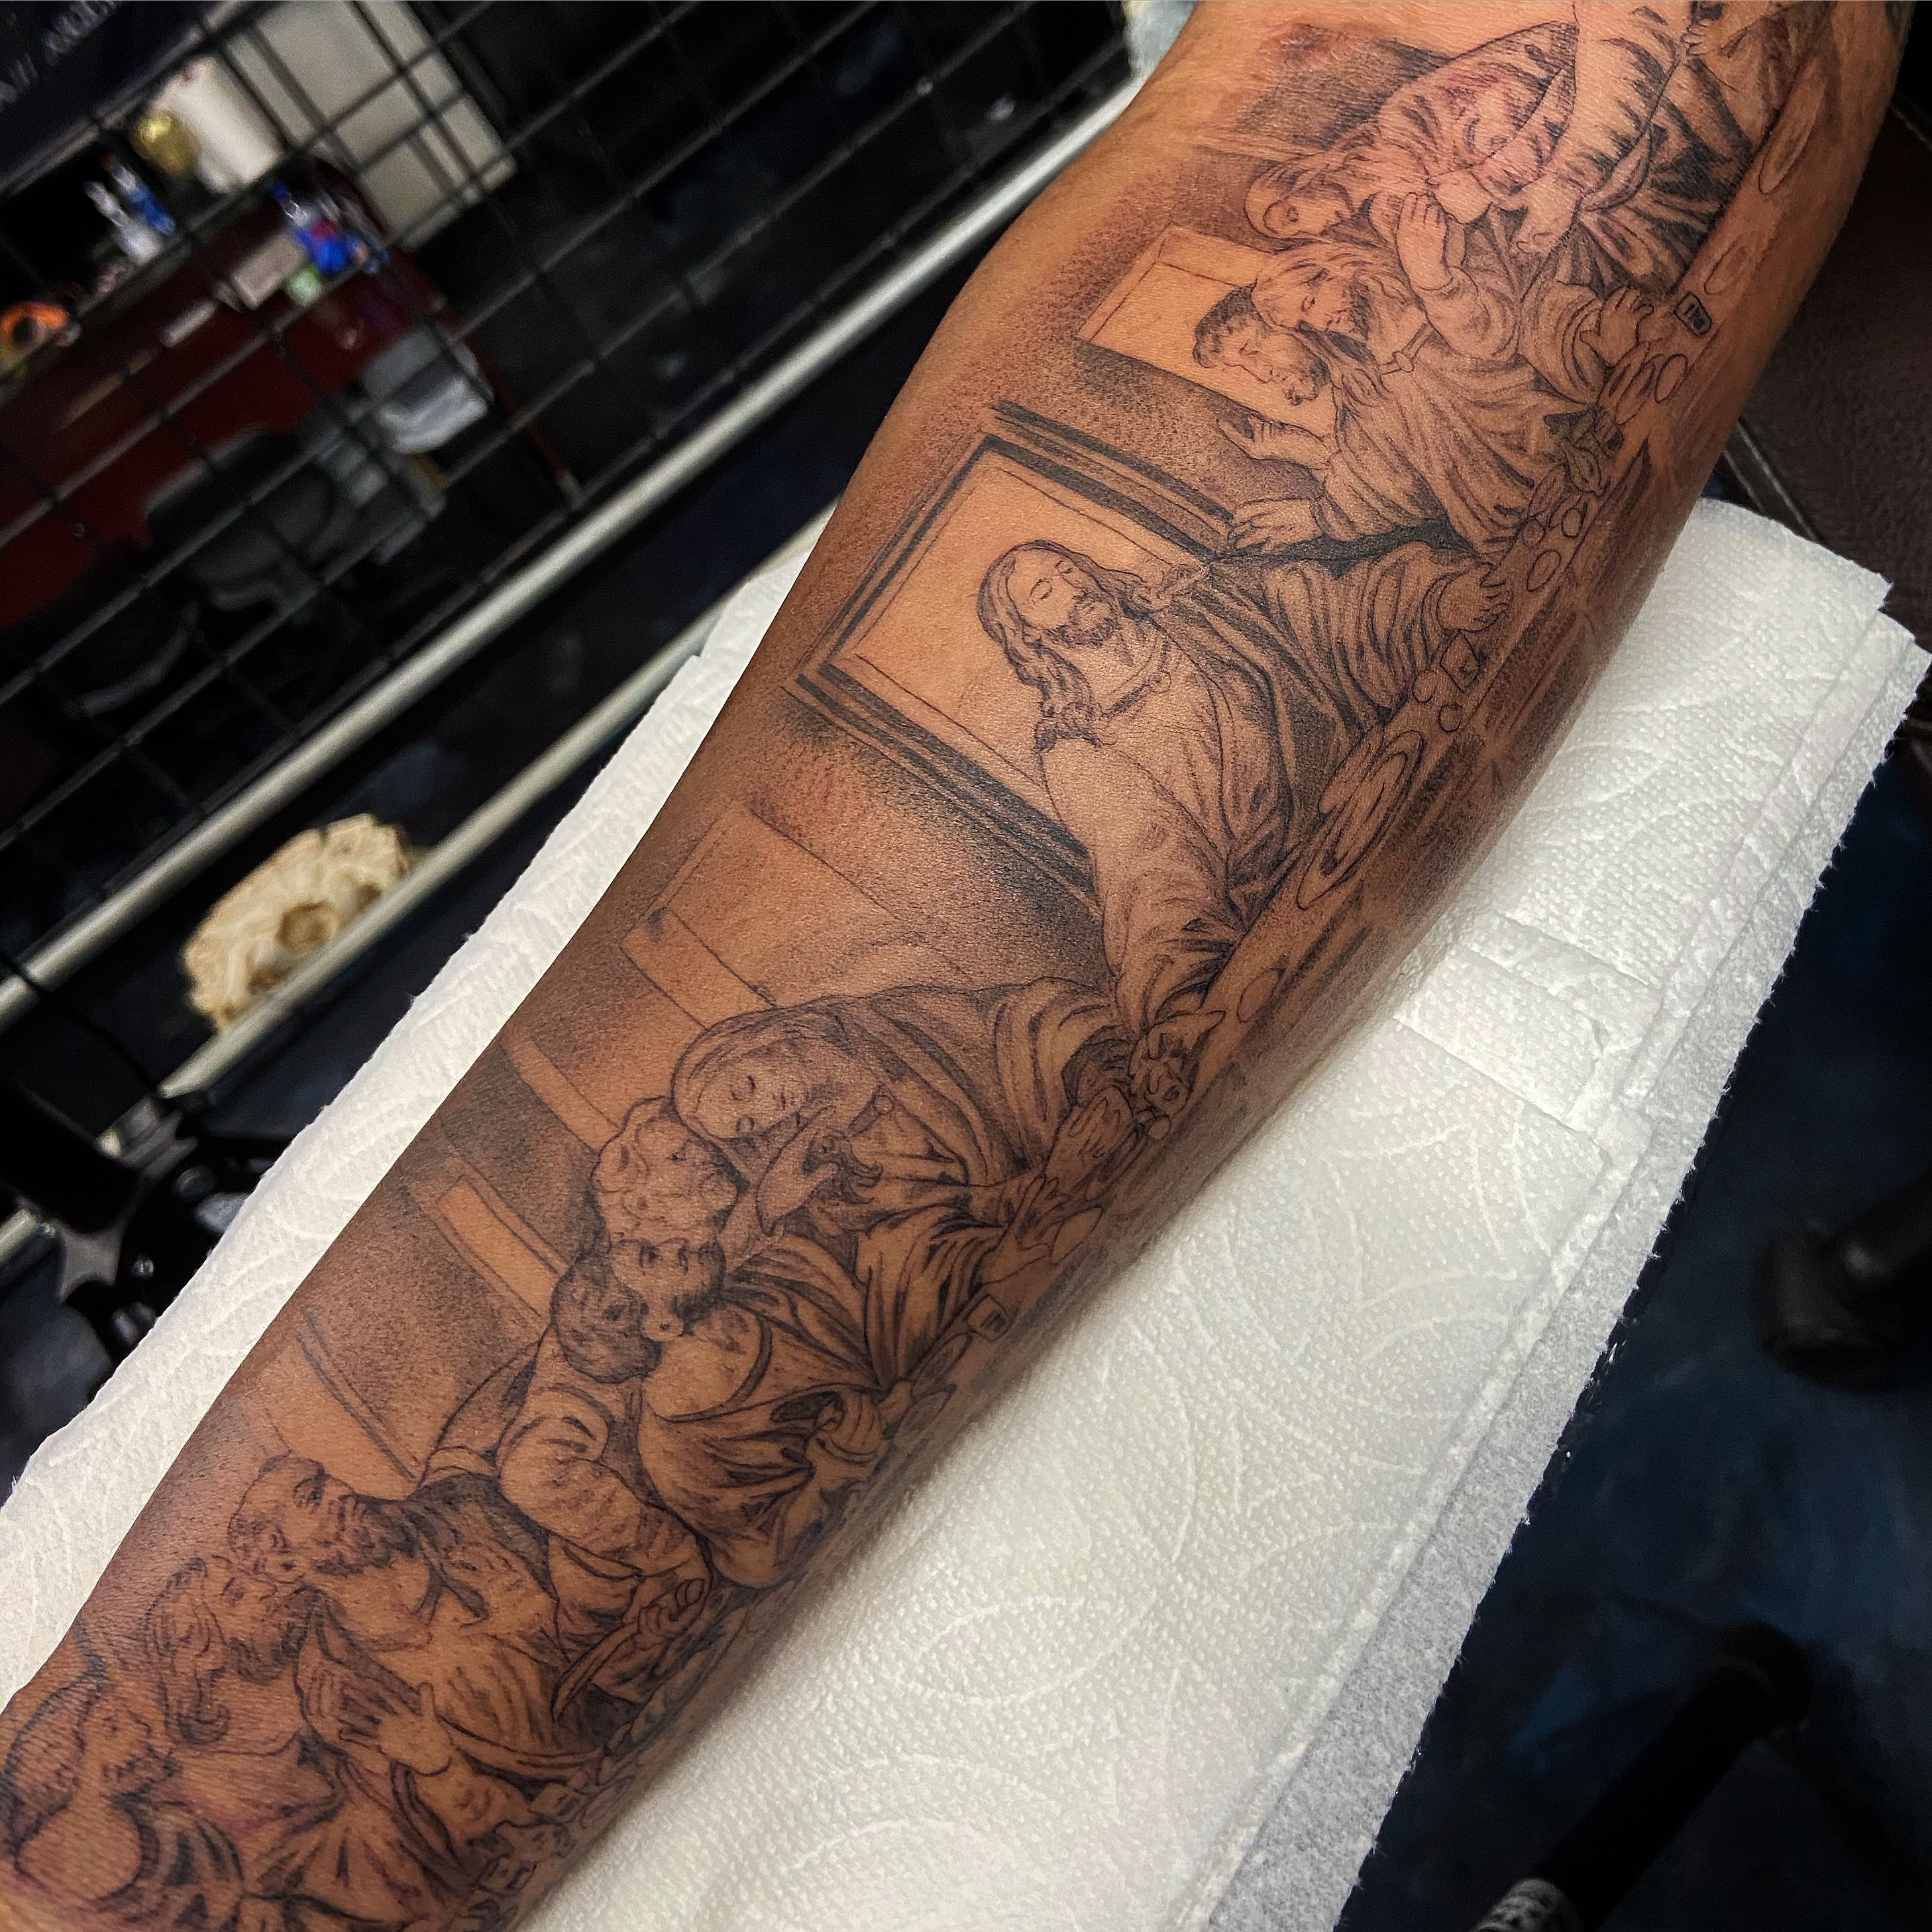 Jesus Sleeve Tattoo - Best Tattoo Ideas Gallery